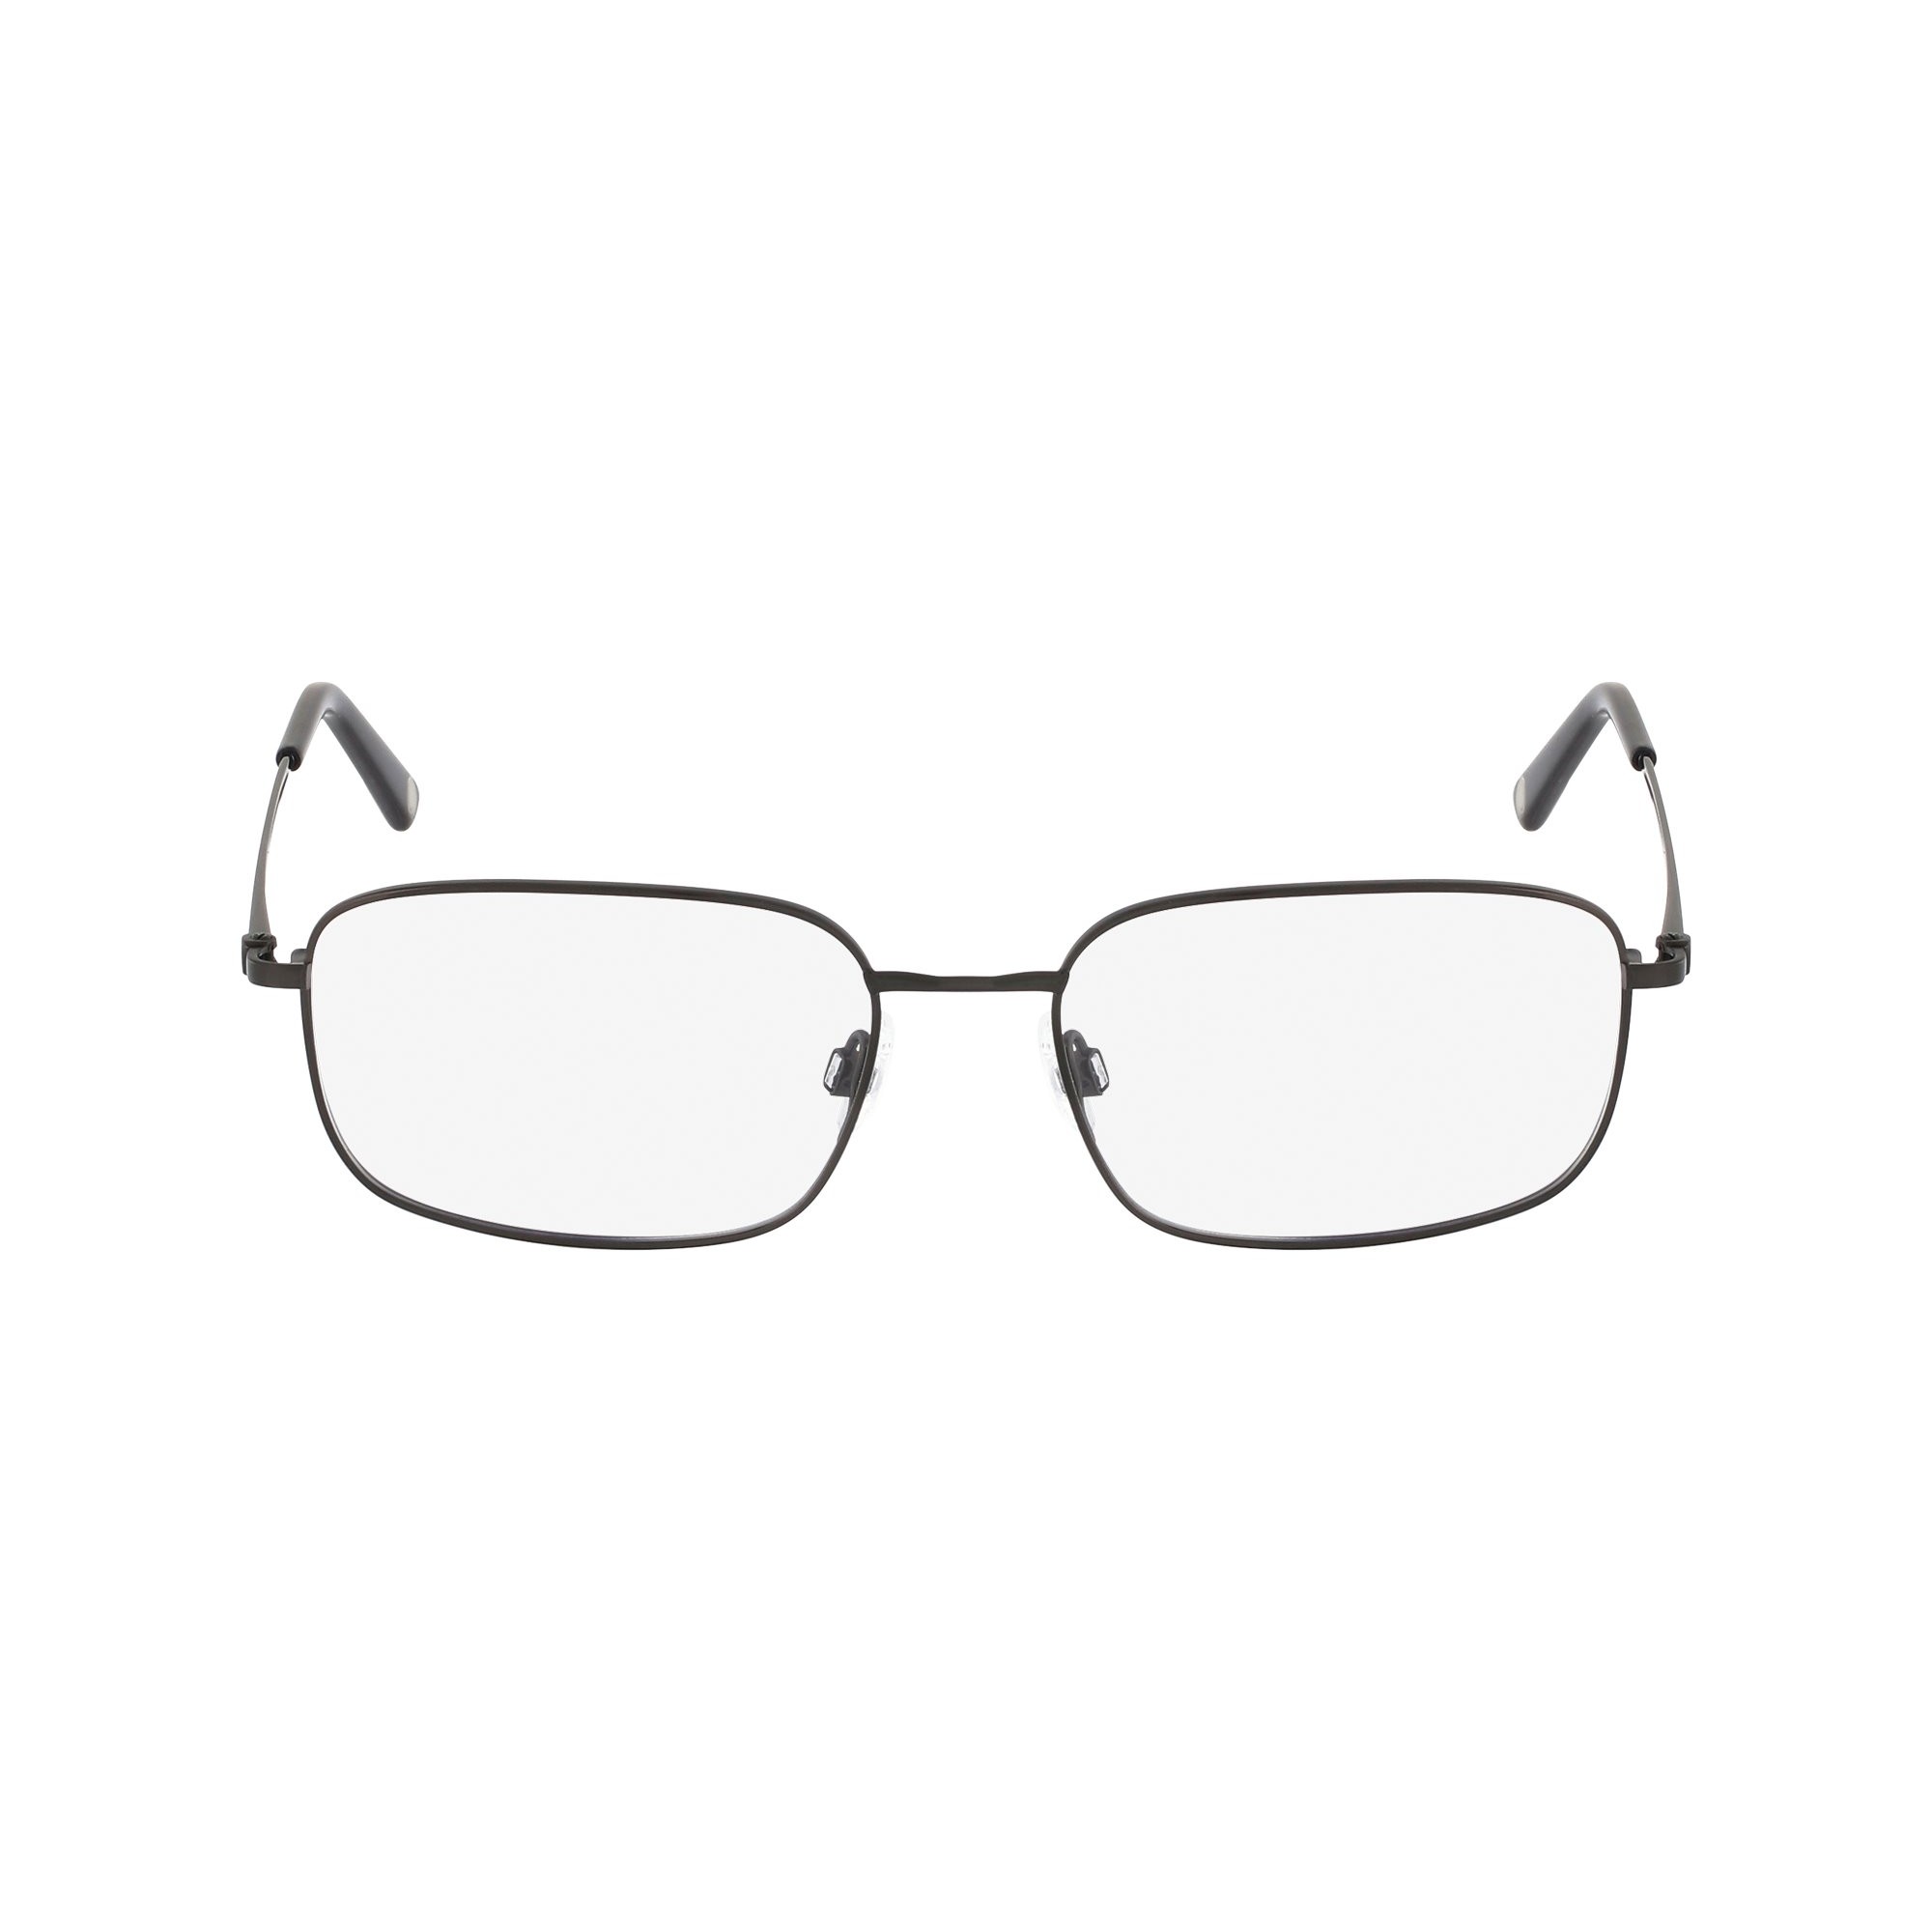 Flexon FLEXON BENJAMIN 600 - 001 Black Chrome | Eyeglasses Man